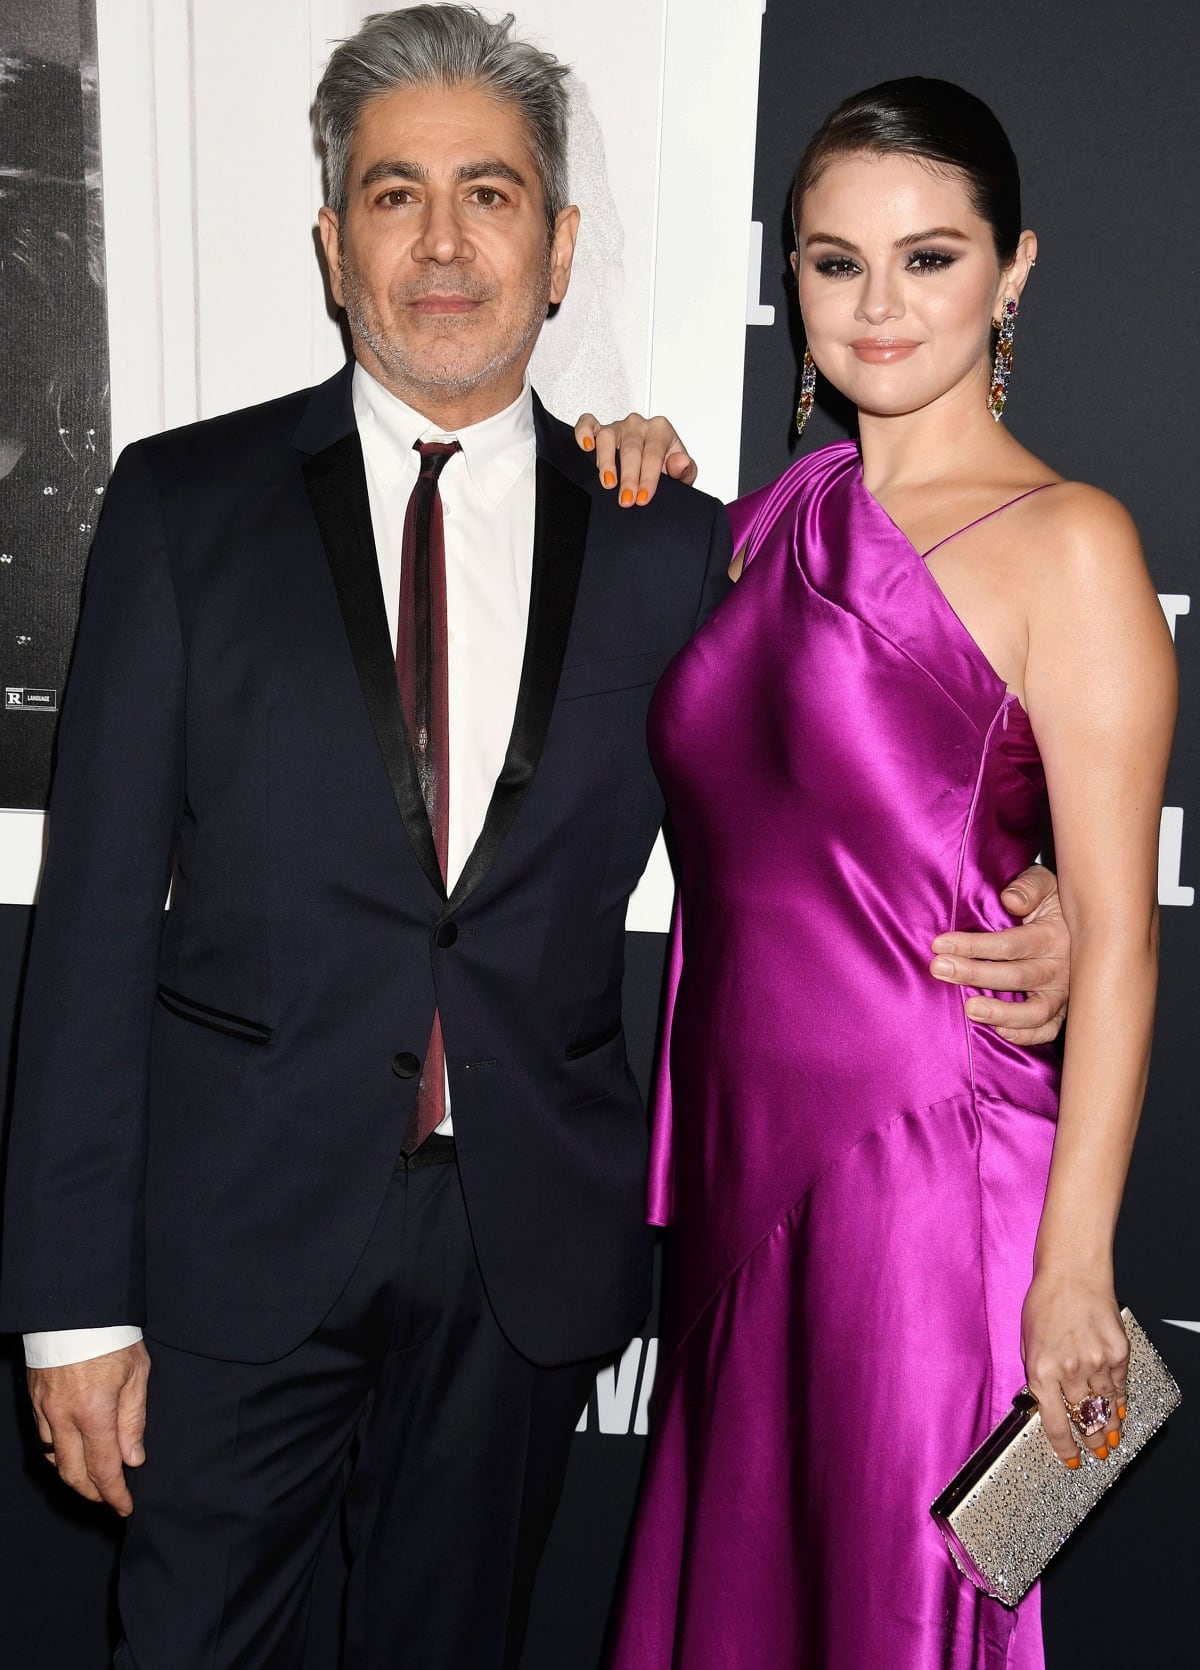 Director Alek Keshishian and Selena Gomez at the Los Angeles premiere of My Mind & Me